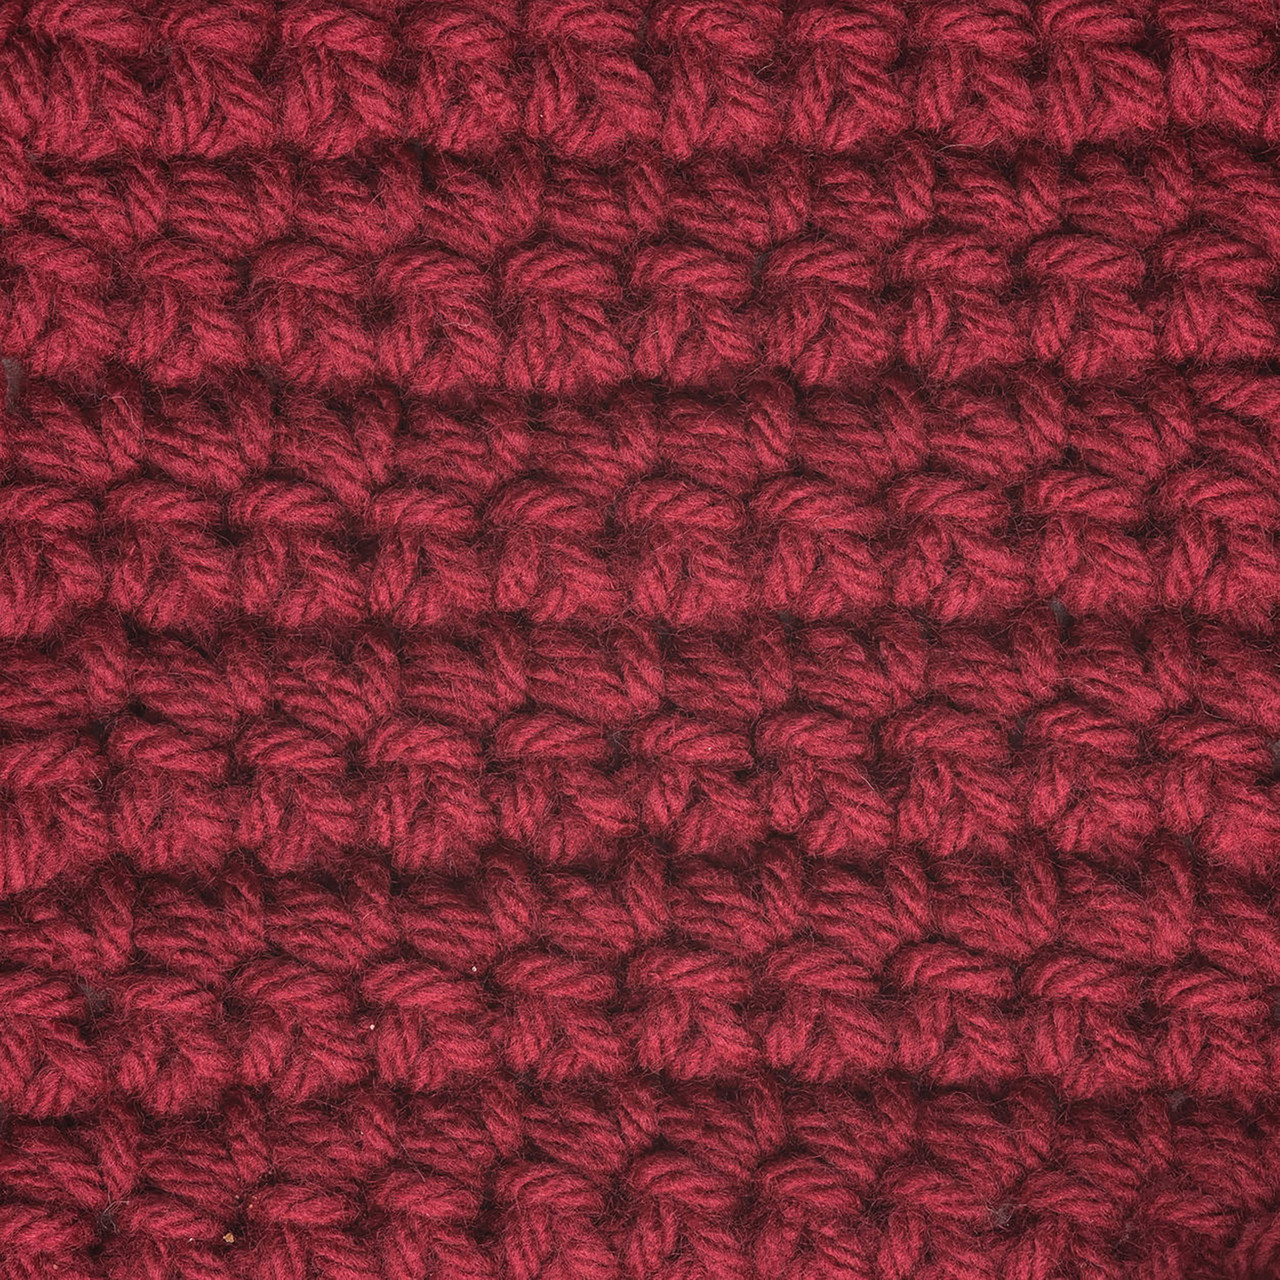 Susan Bates Silvalume Soft Ergonomic Crochet Hook Set-Sizes E4/3.5mm to K10.5/6.5mm